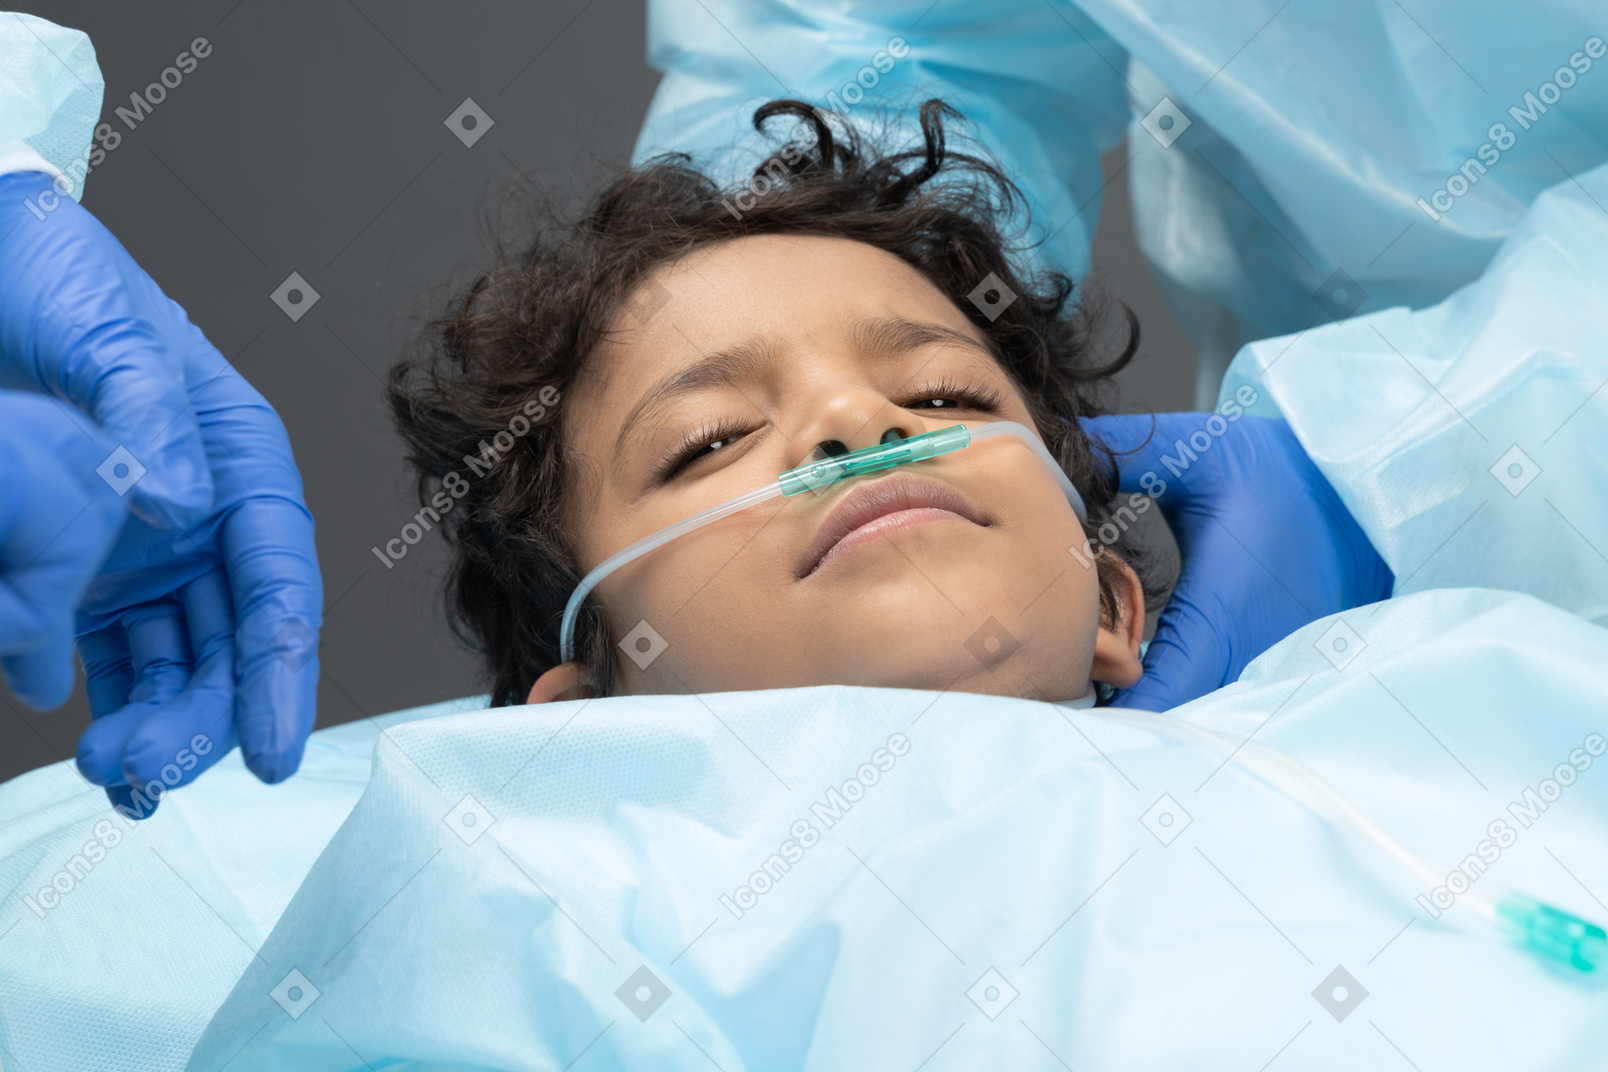 Niño bajo anestesia